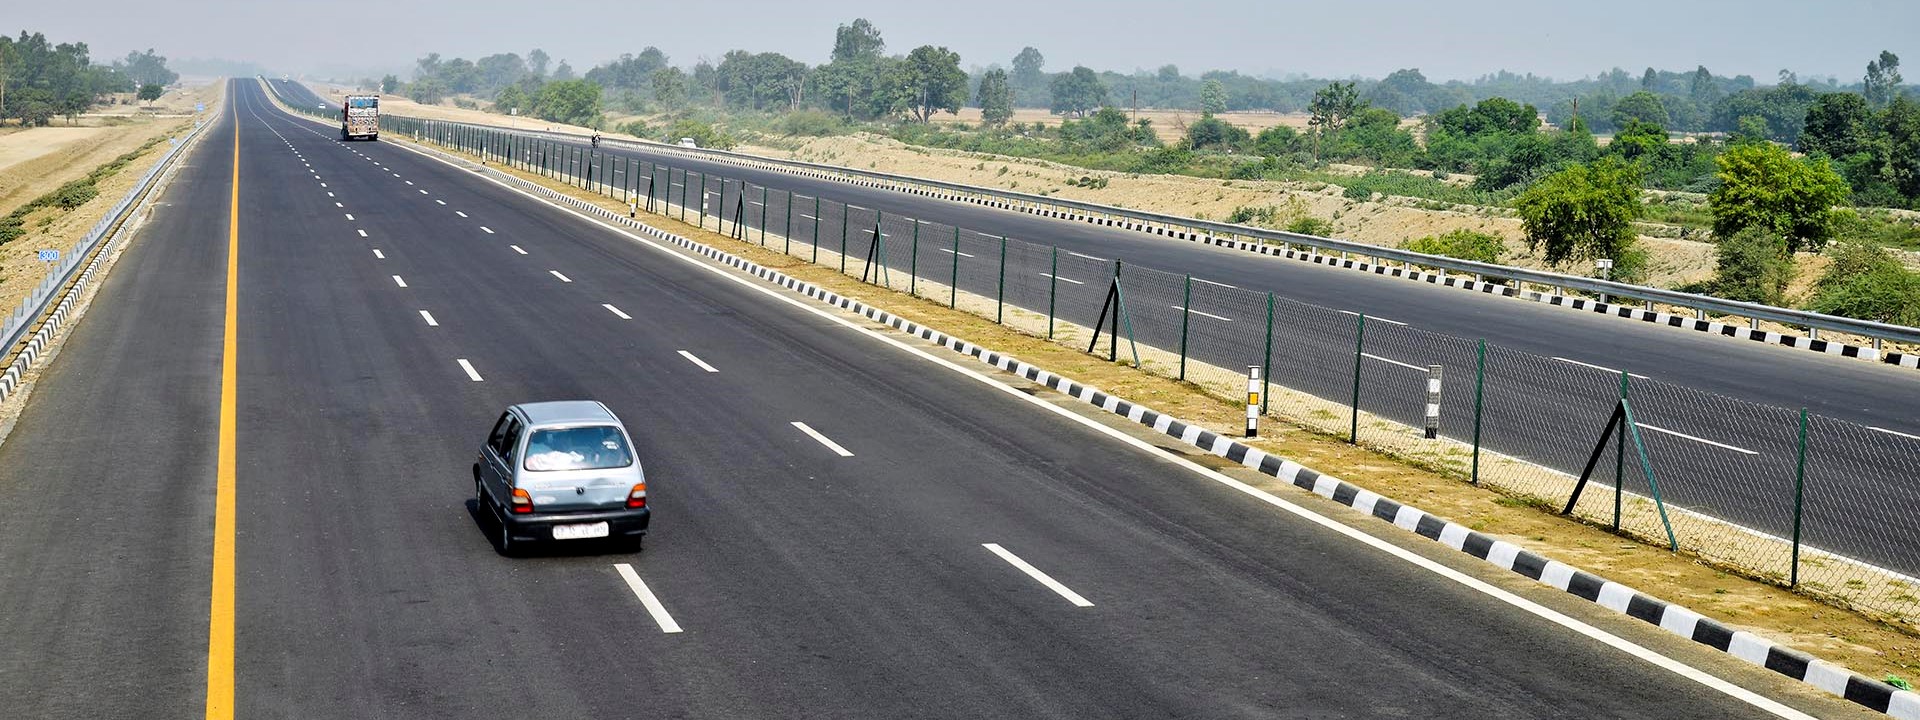 Unnao-Lucknow – India's Longest Expressway